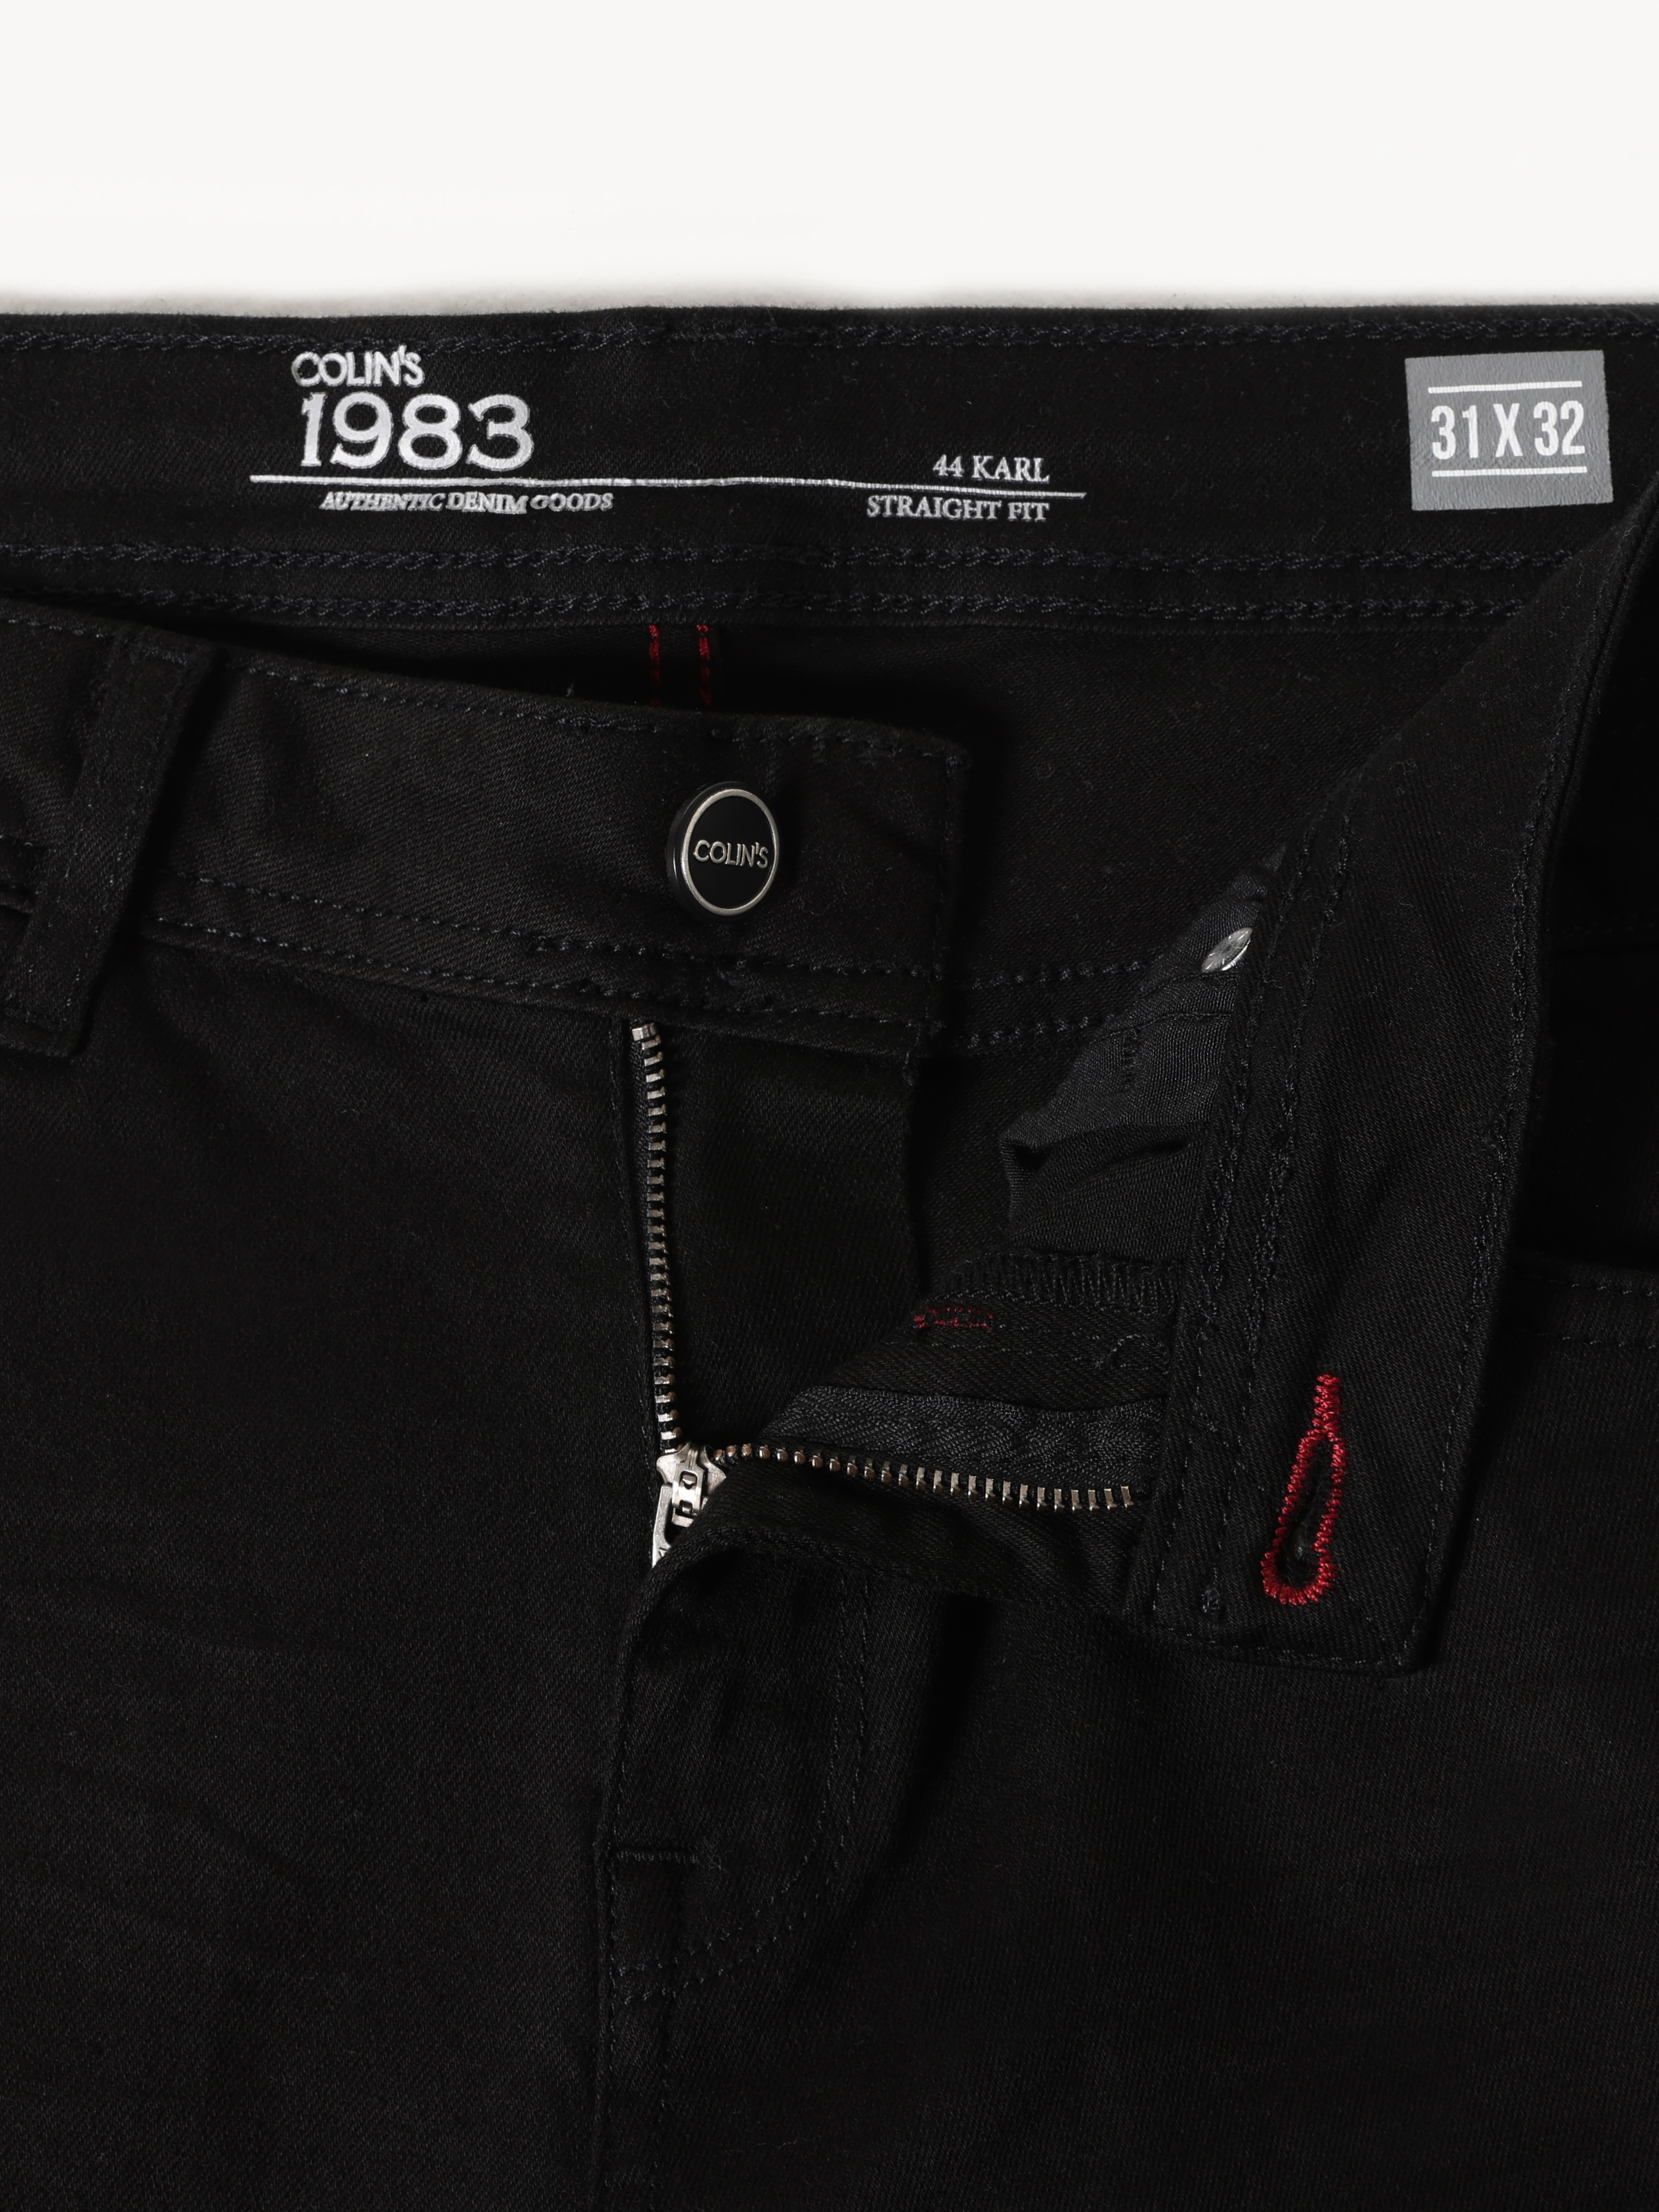 Afișați detalii pentru Pantaloni De Barbati Negru Straight Fit 044 KARL